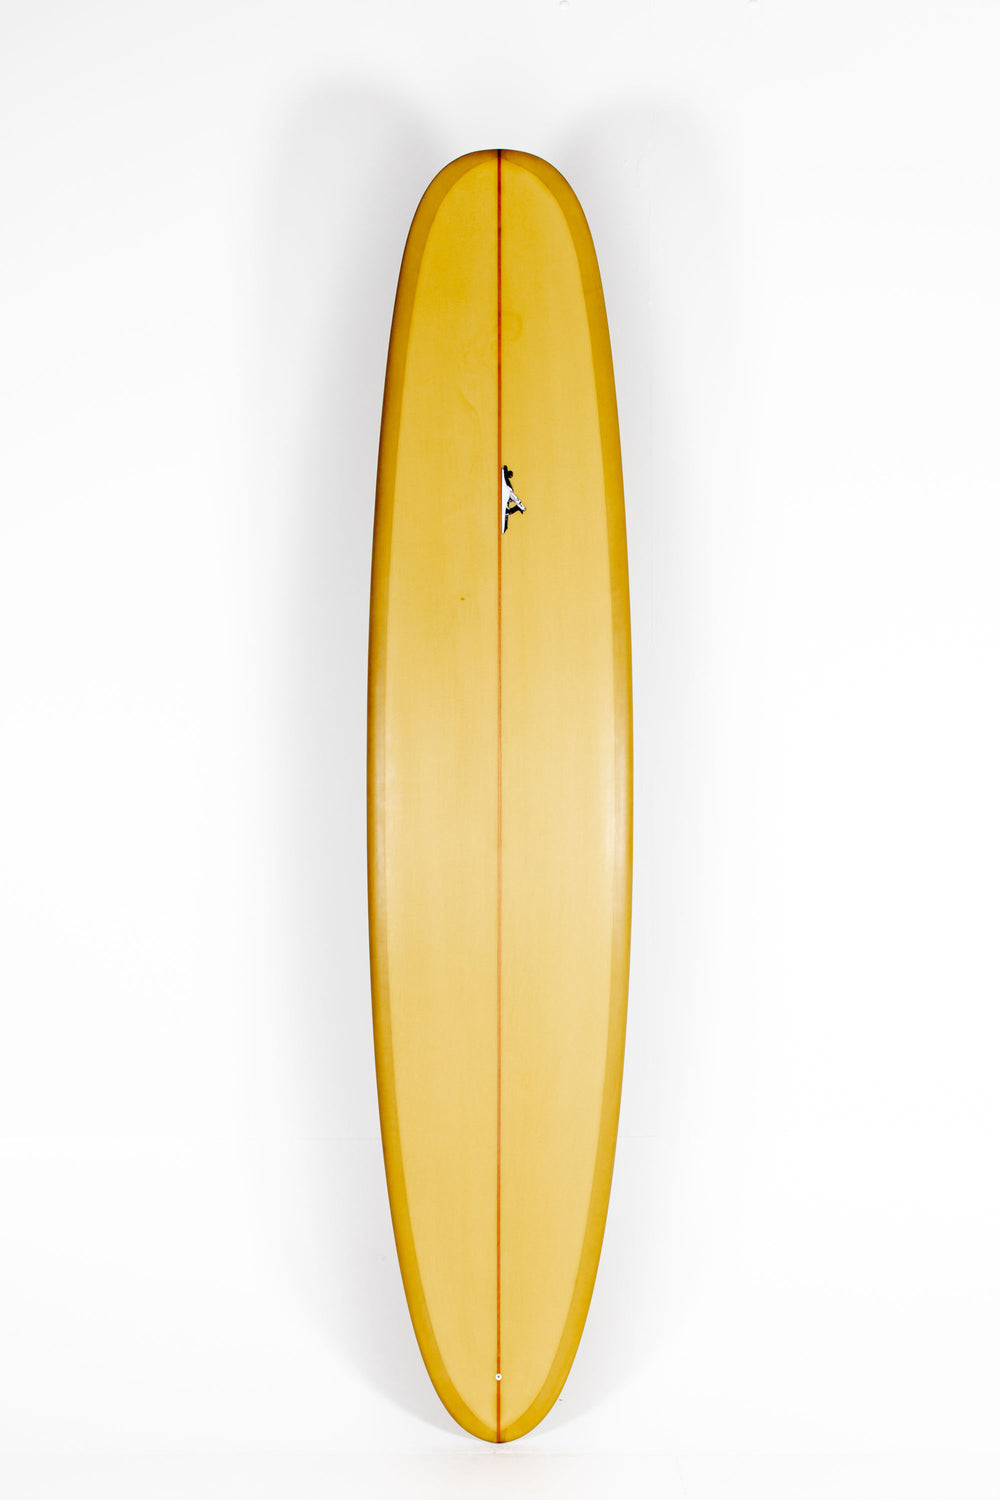 Pukas Surf Shop - Thomas Surfboards - WIZL - 9'0